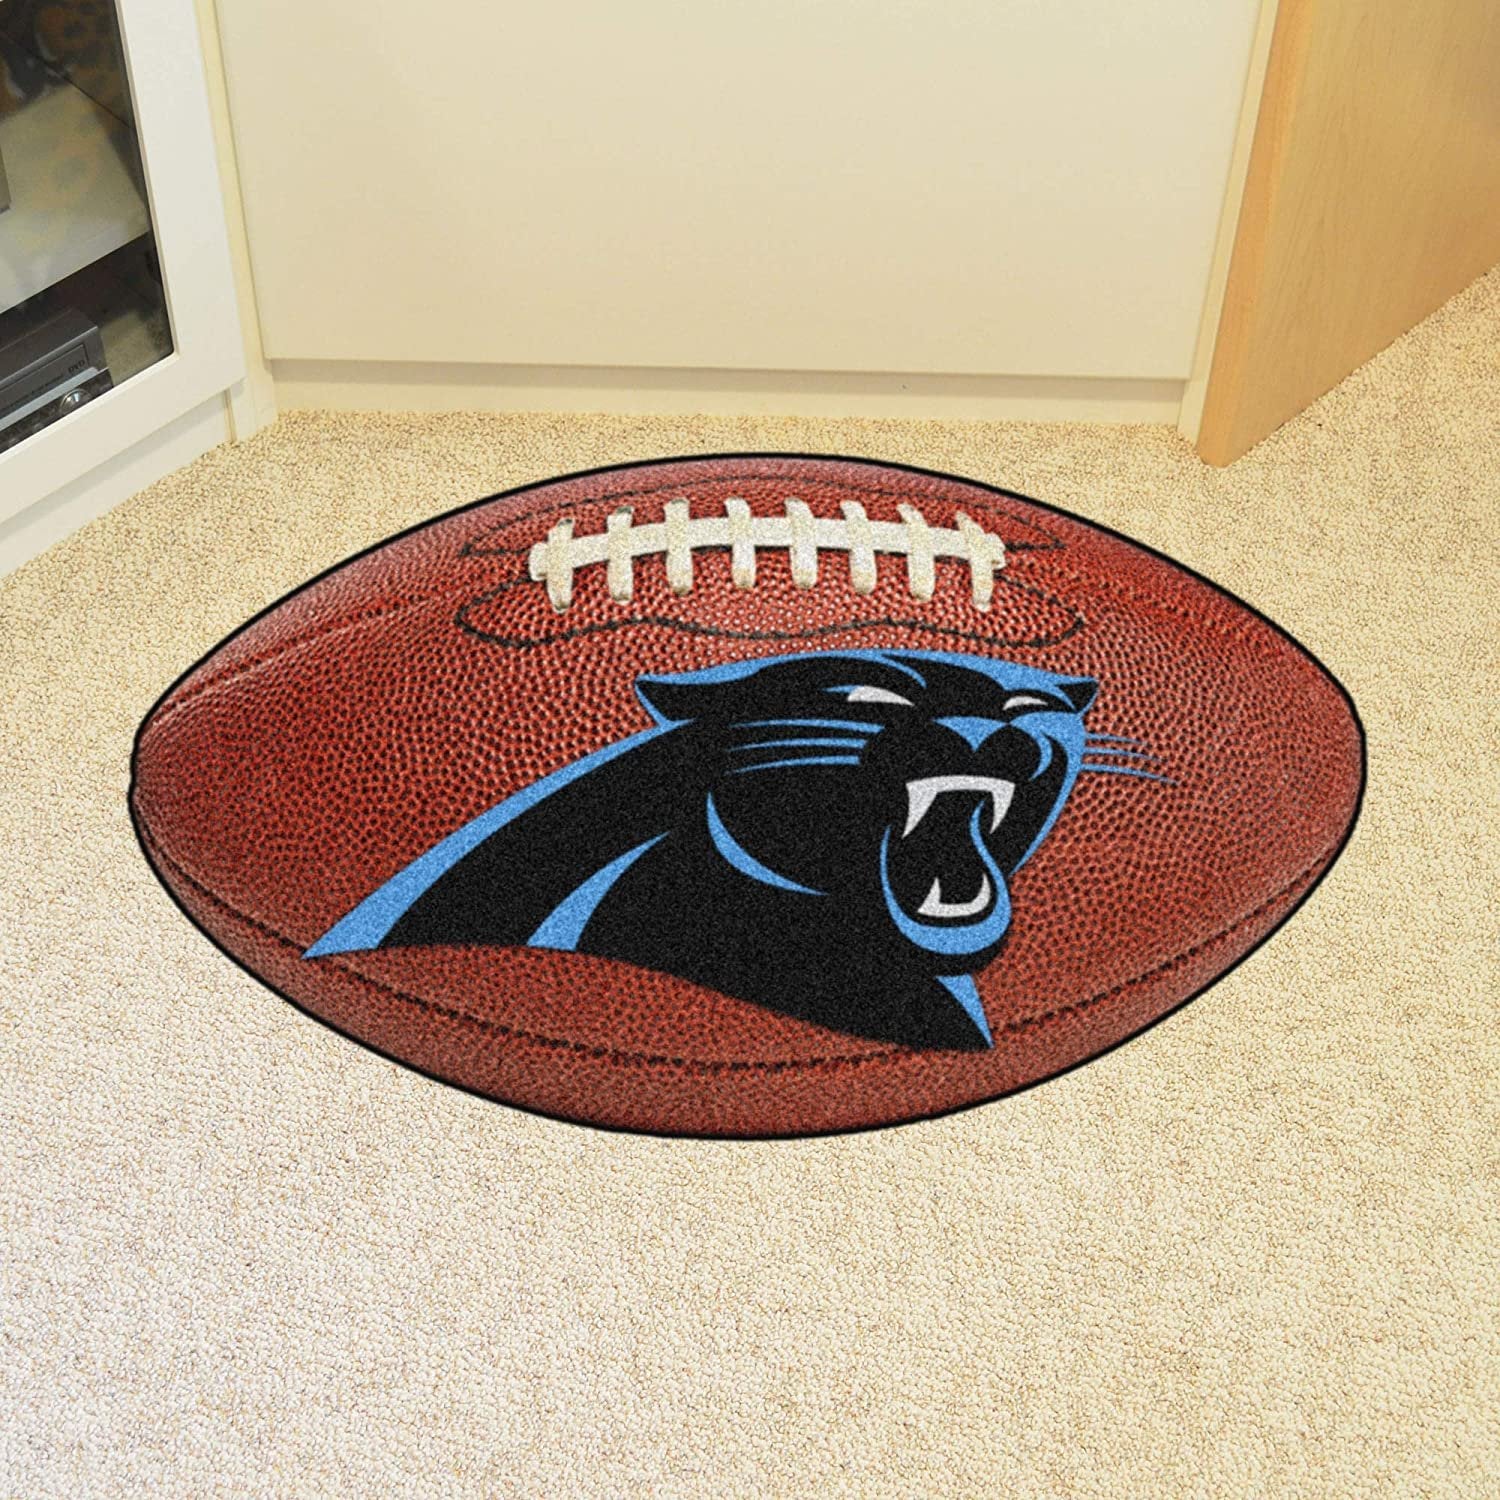 Carolina Panthers Floor Mat Area Rug, 20x32 Inch, Non-Skid Backing, Football Design